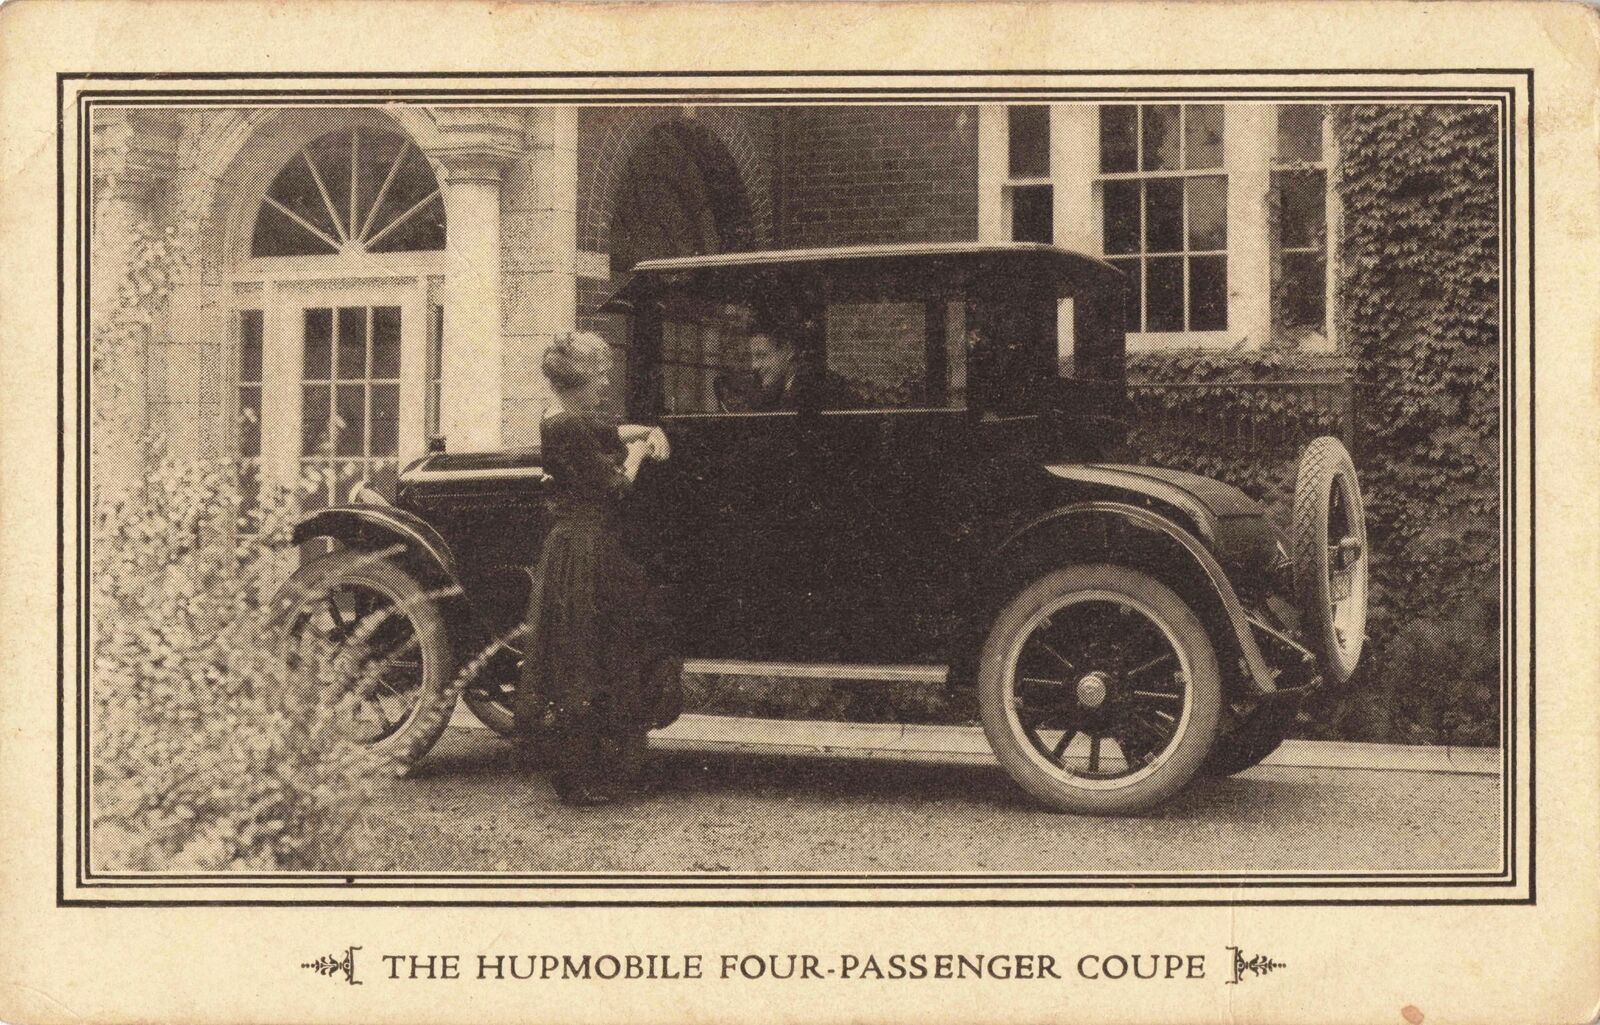 SE Detroit MI 1908 Robert Hupp leaves Ford co-founds Hupp Motor Car Co 4-SEATER